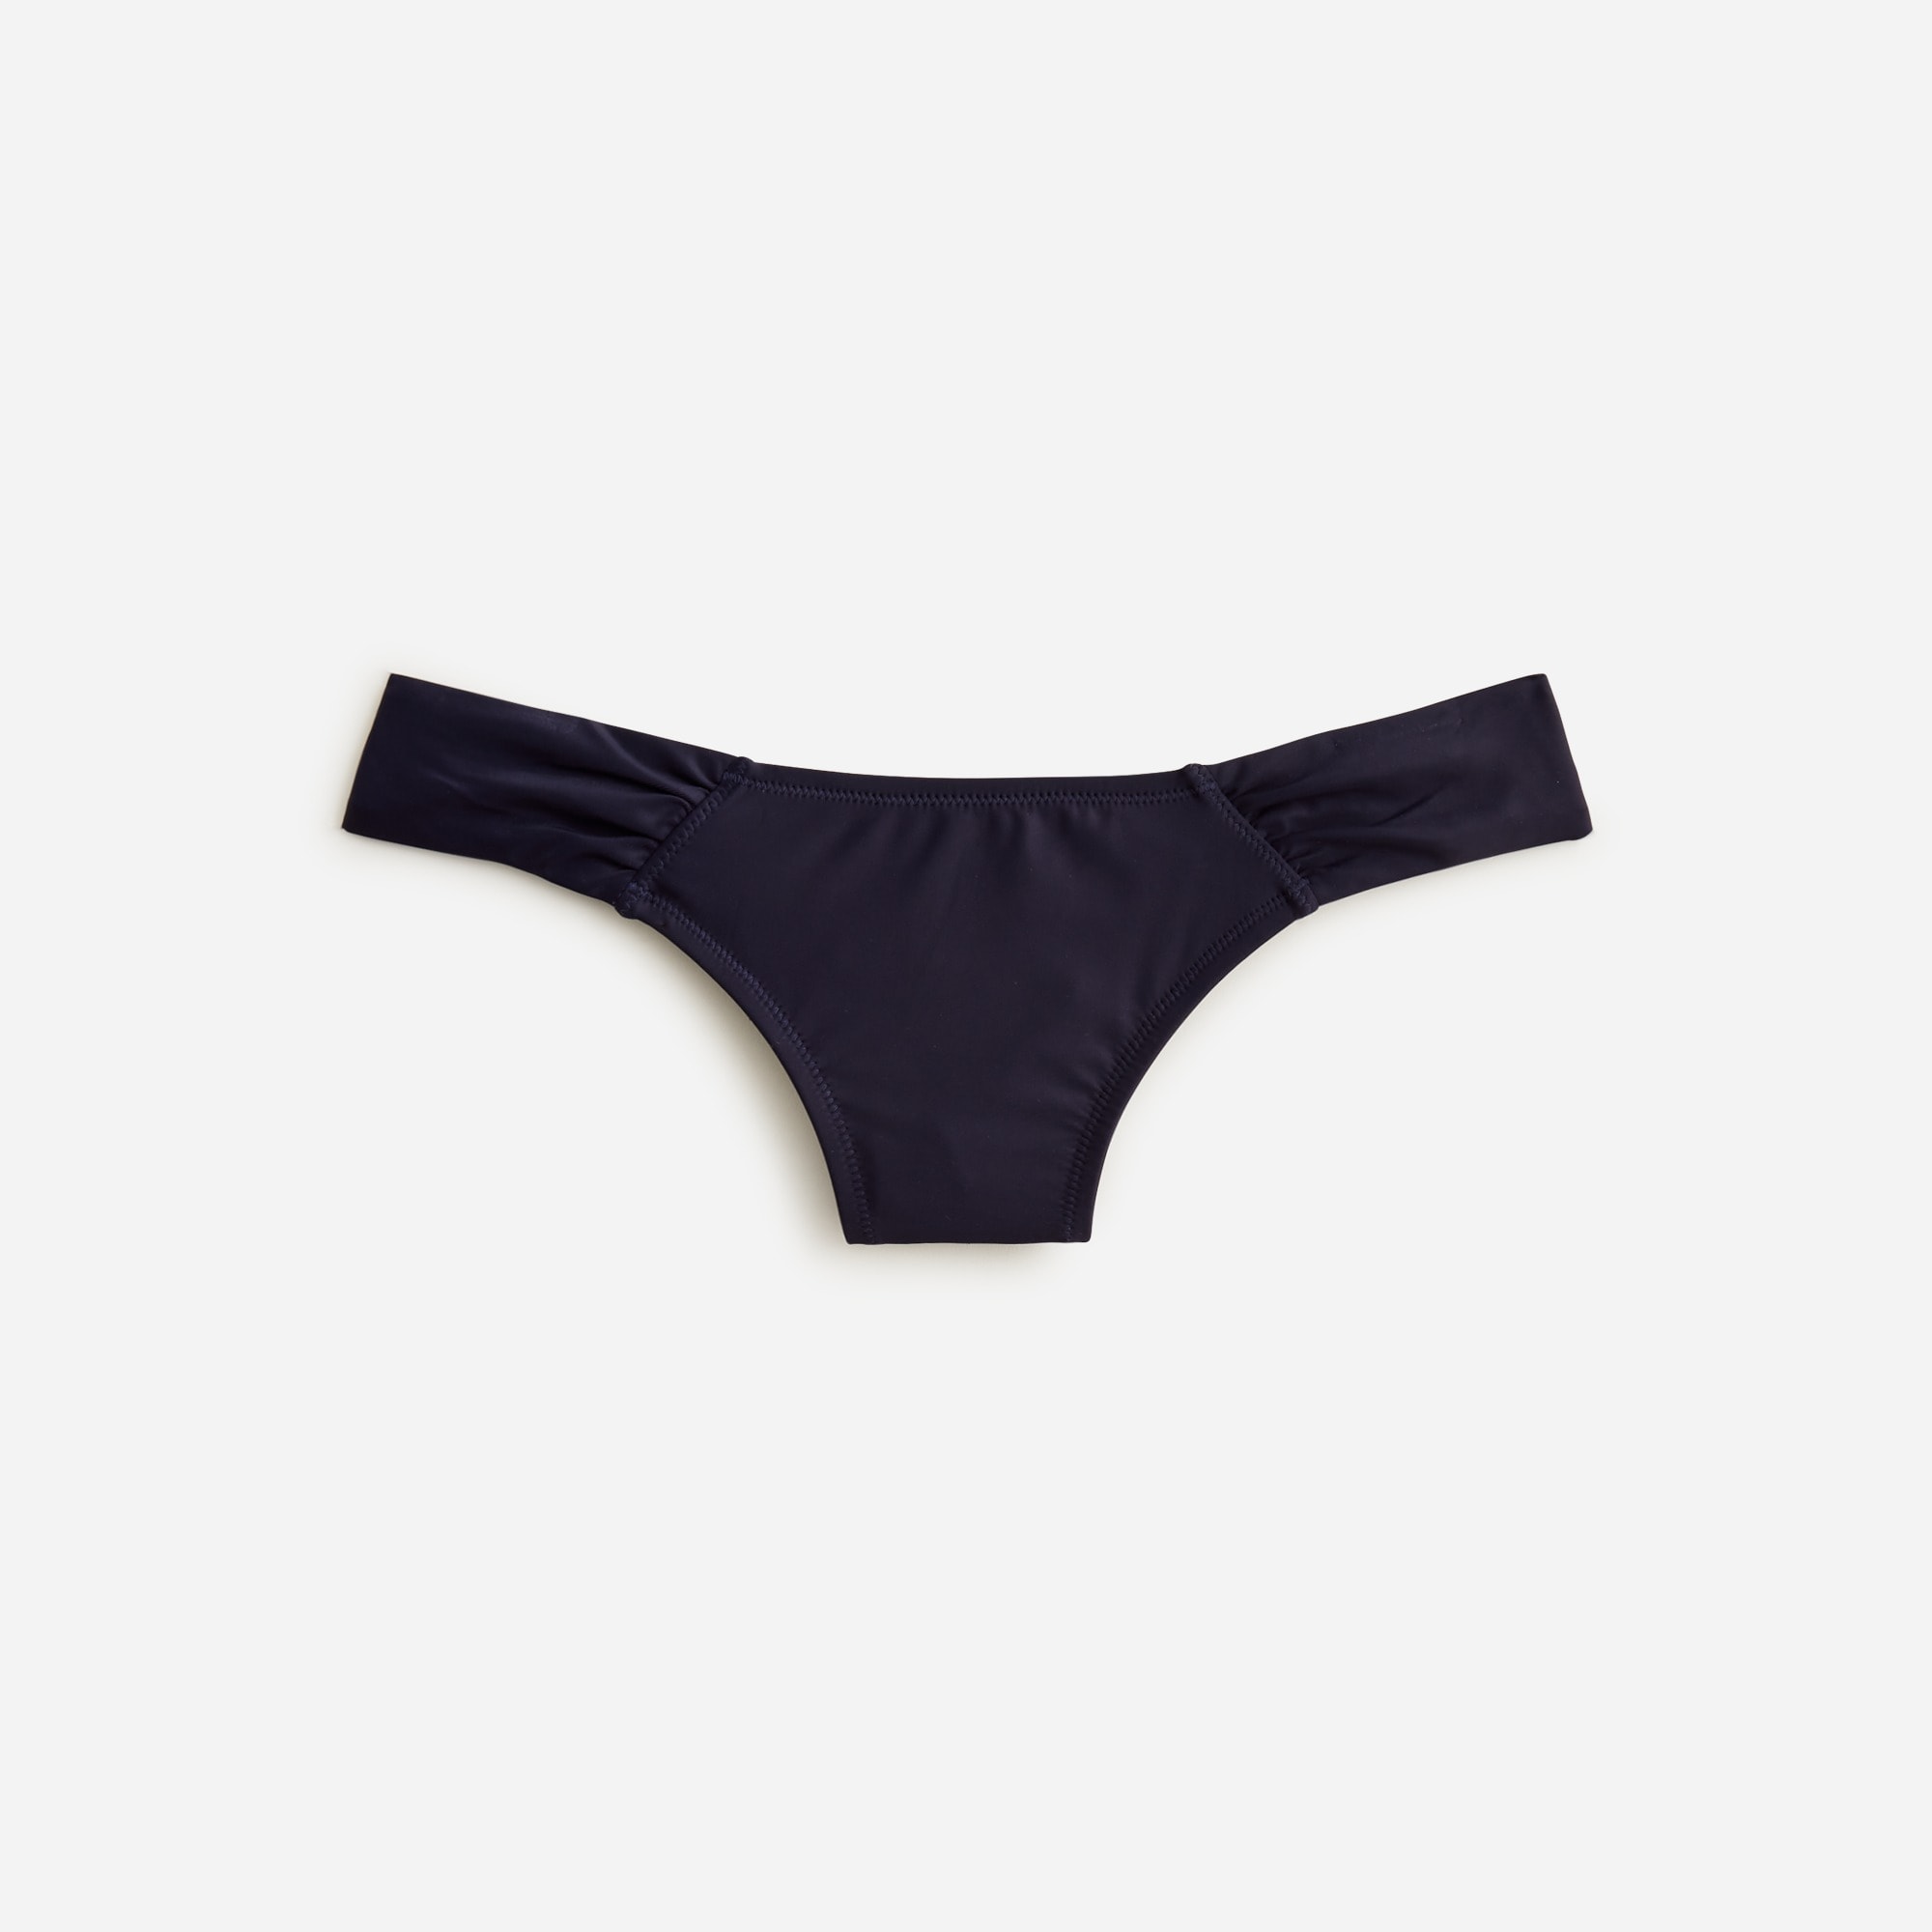  Ruched low-rise bikini bottom